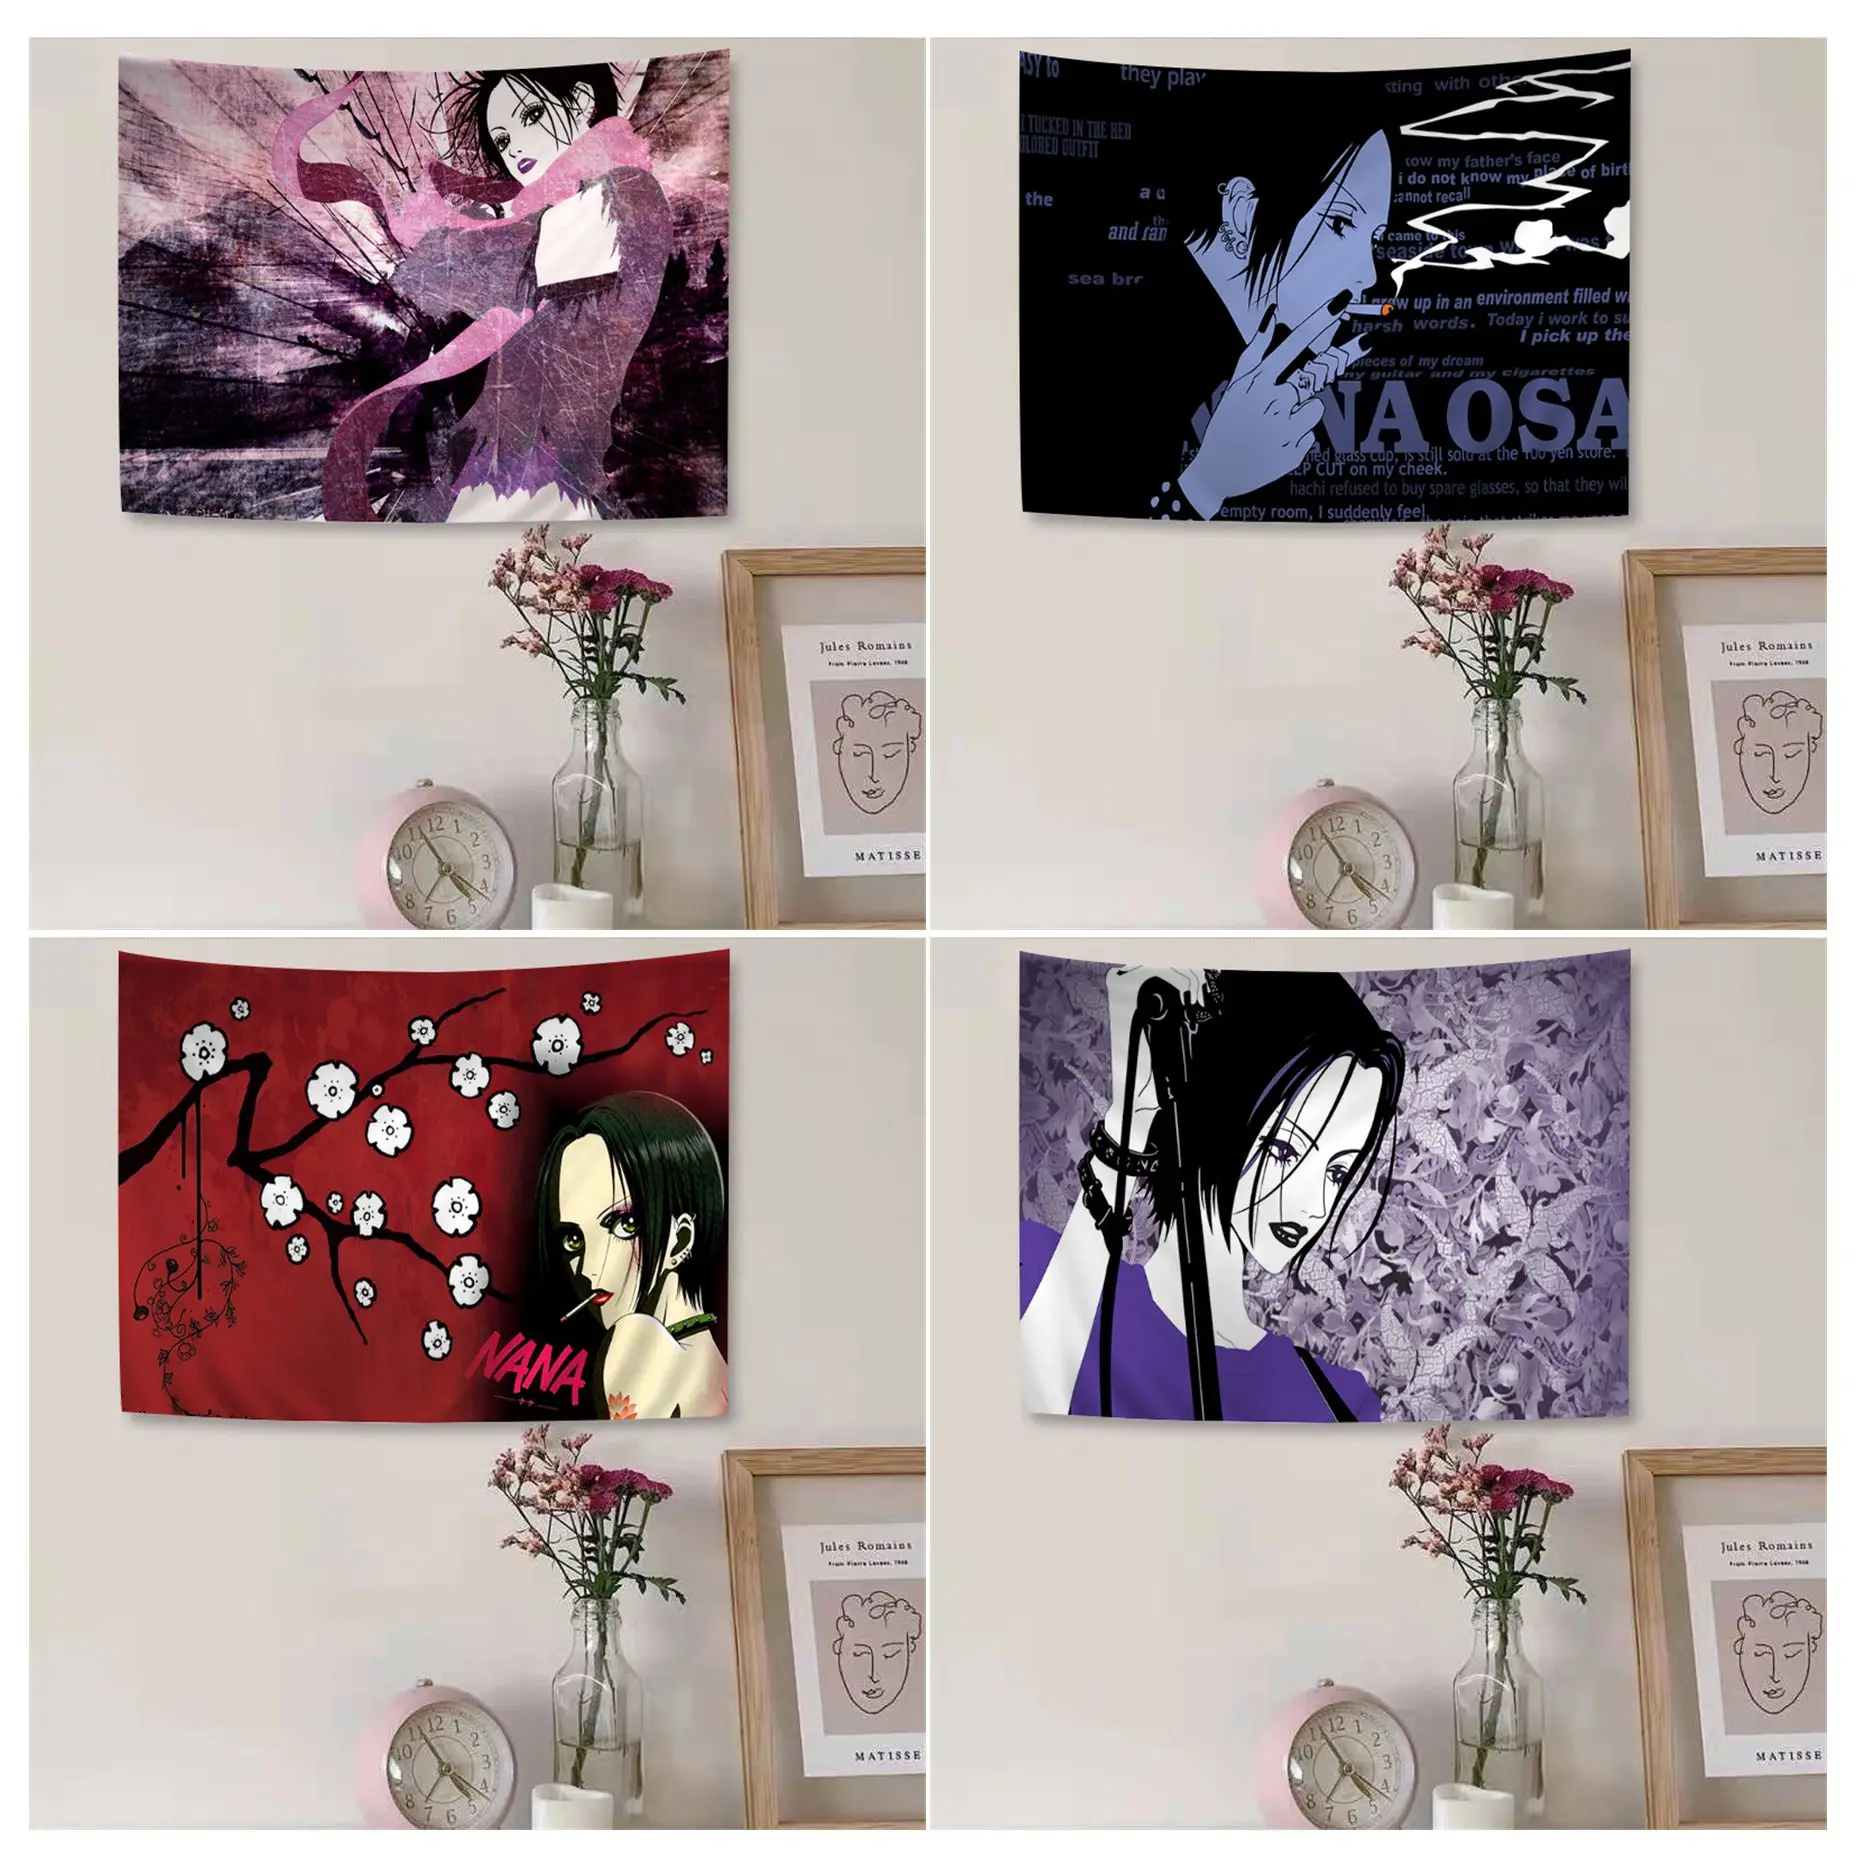 

Nana Anime Hippie Wall Hanging Tapestries Hanging Tarot Hippie Wall Rugs Dorm Home Decor